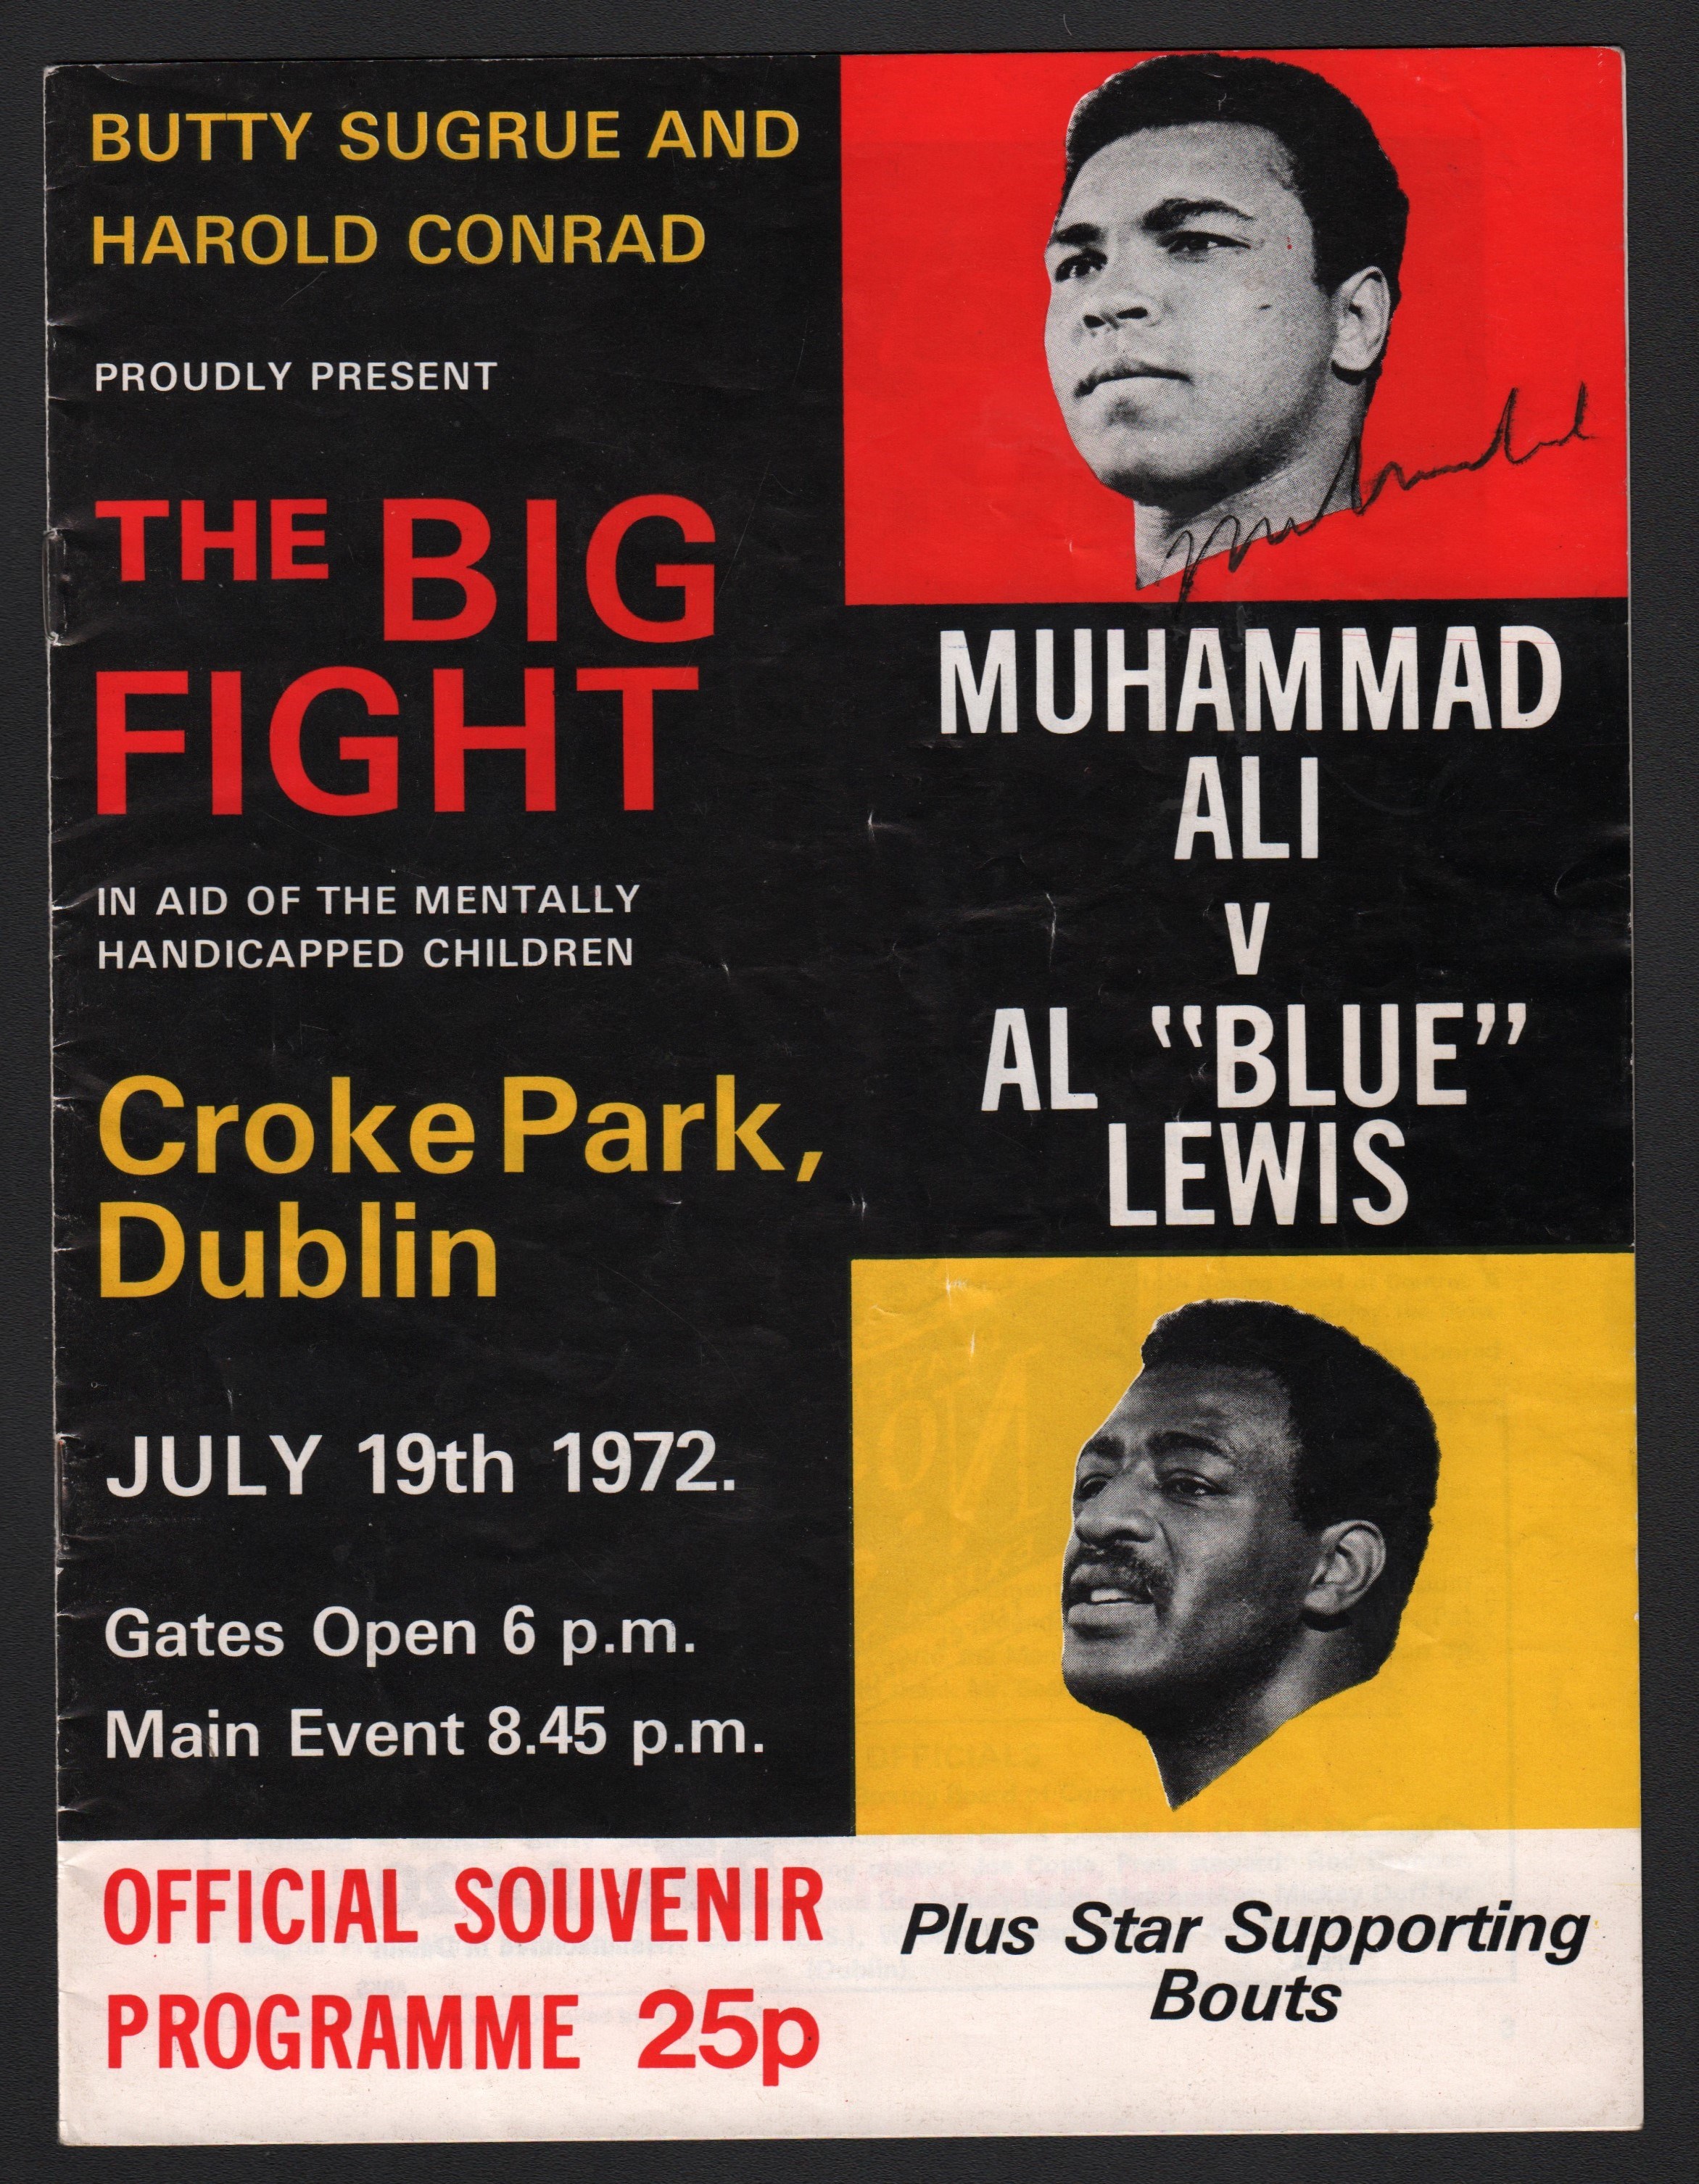 - Signed Muhammad Ali vs. Al "Blue" Lewis fight program.